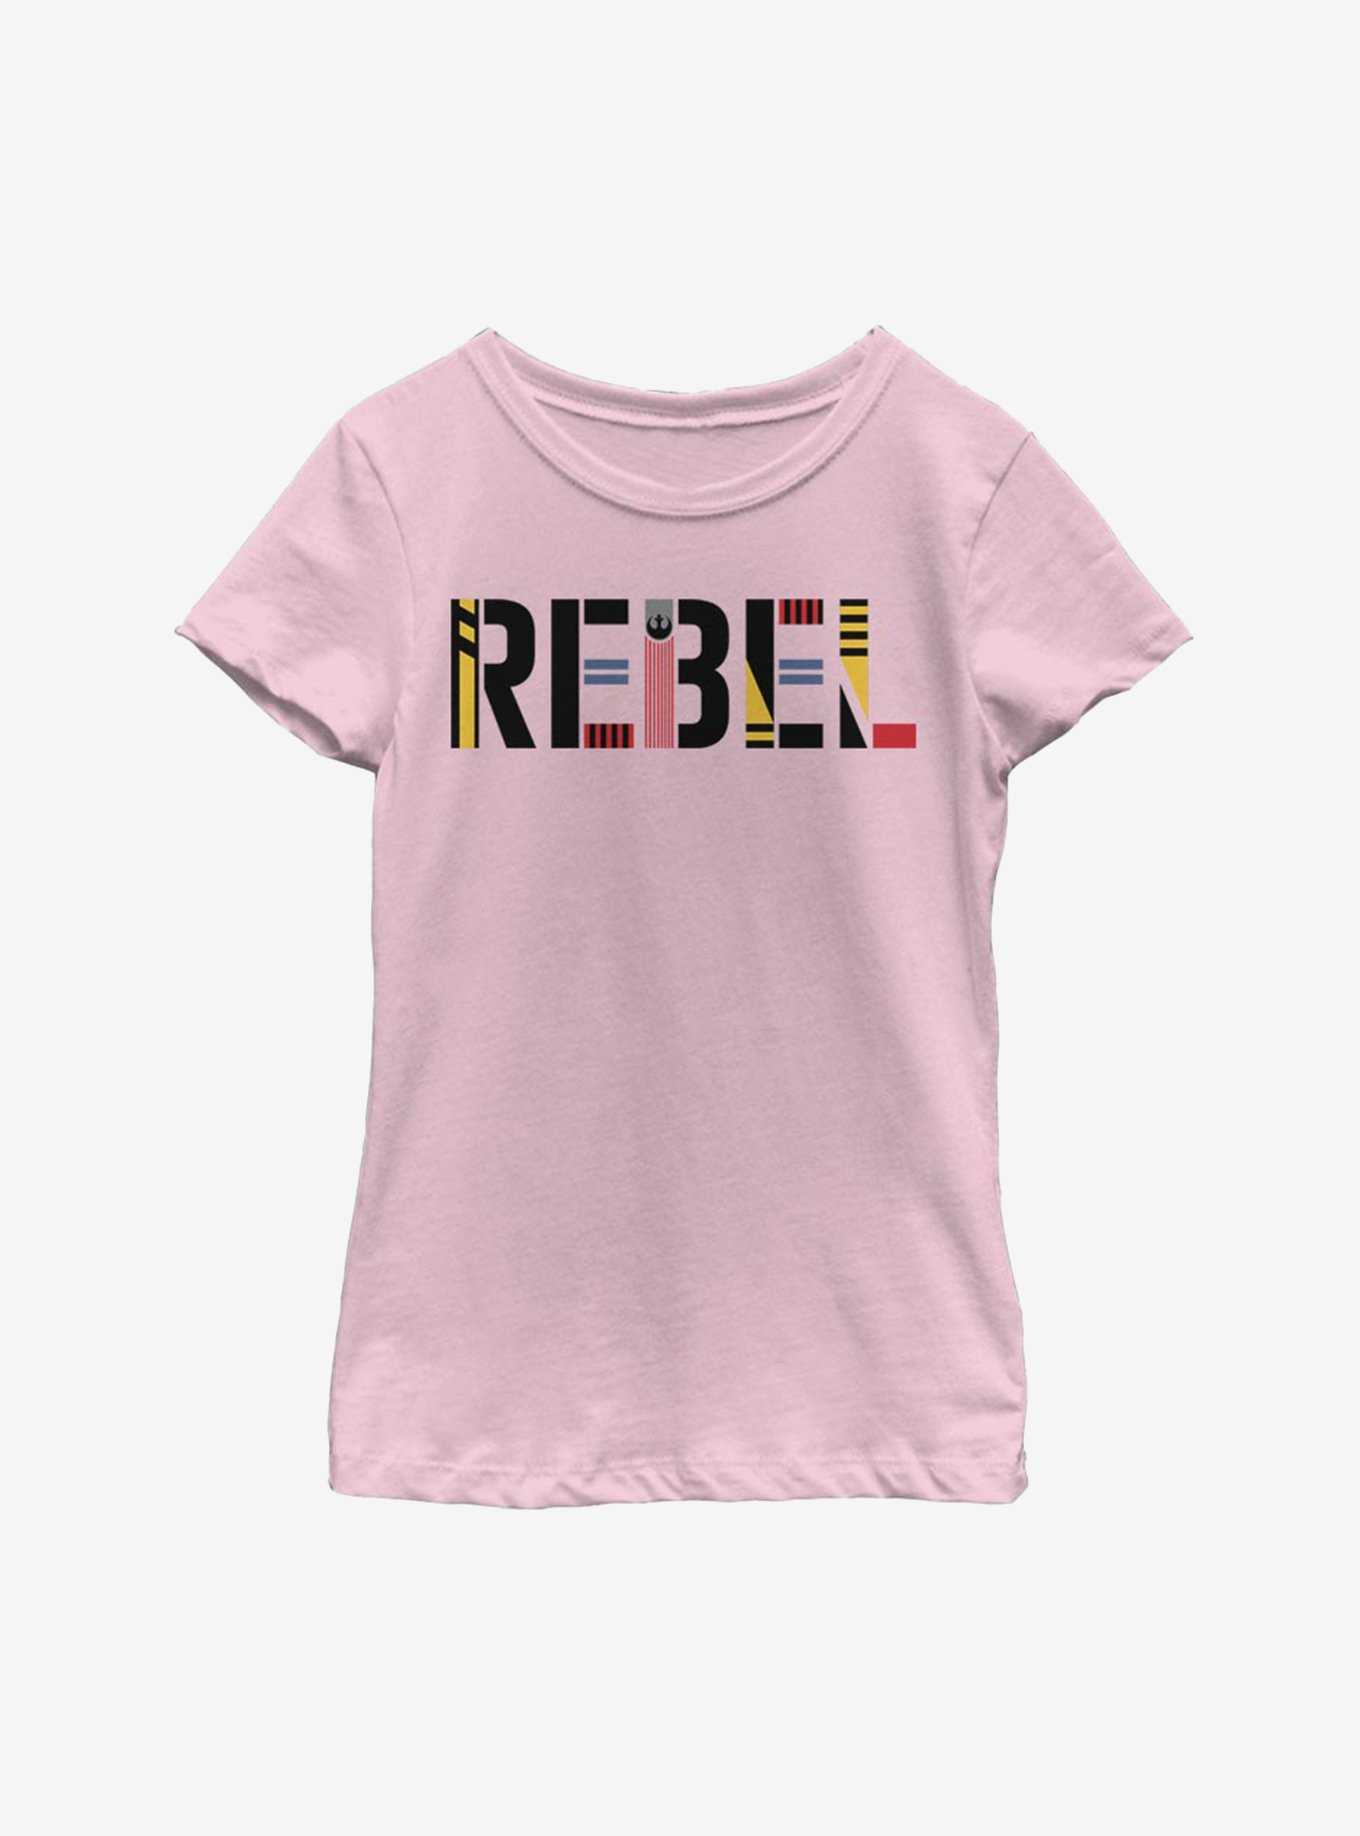 Star Wars Episode IX The Rise Of Skywalker Rebel Simple Youth Girls T-Shirt, , hi-res